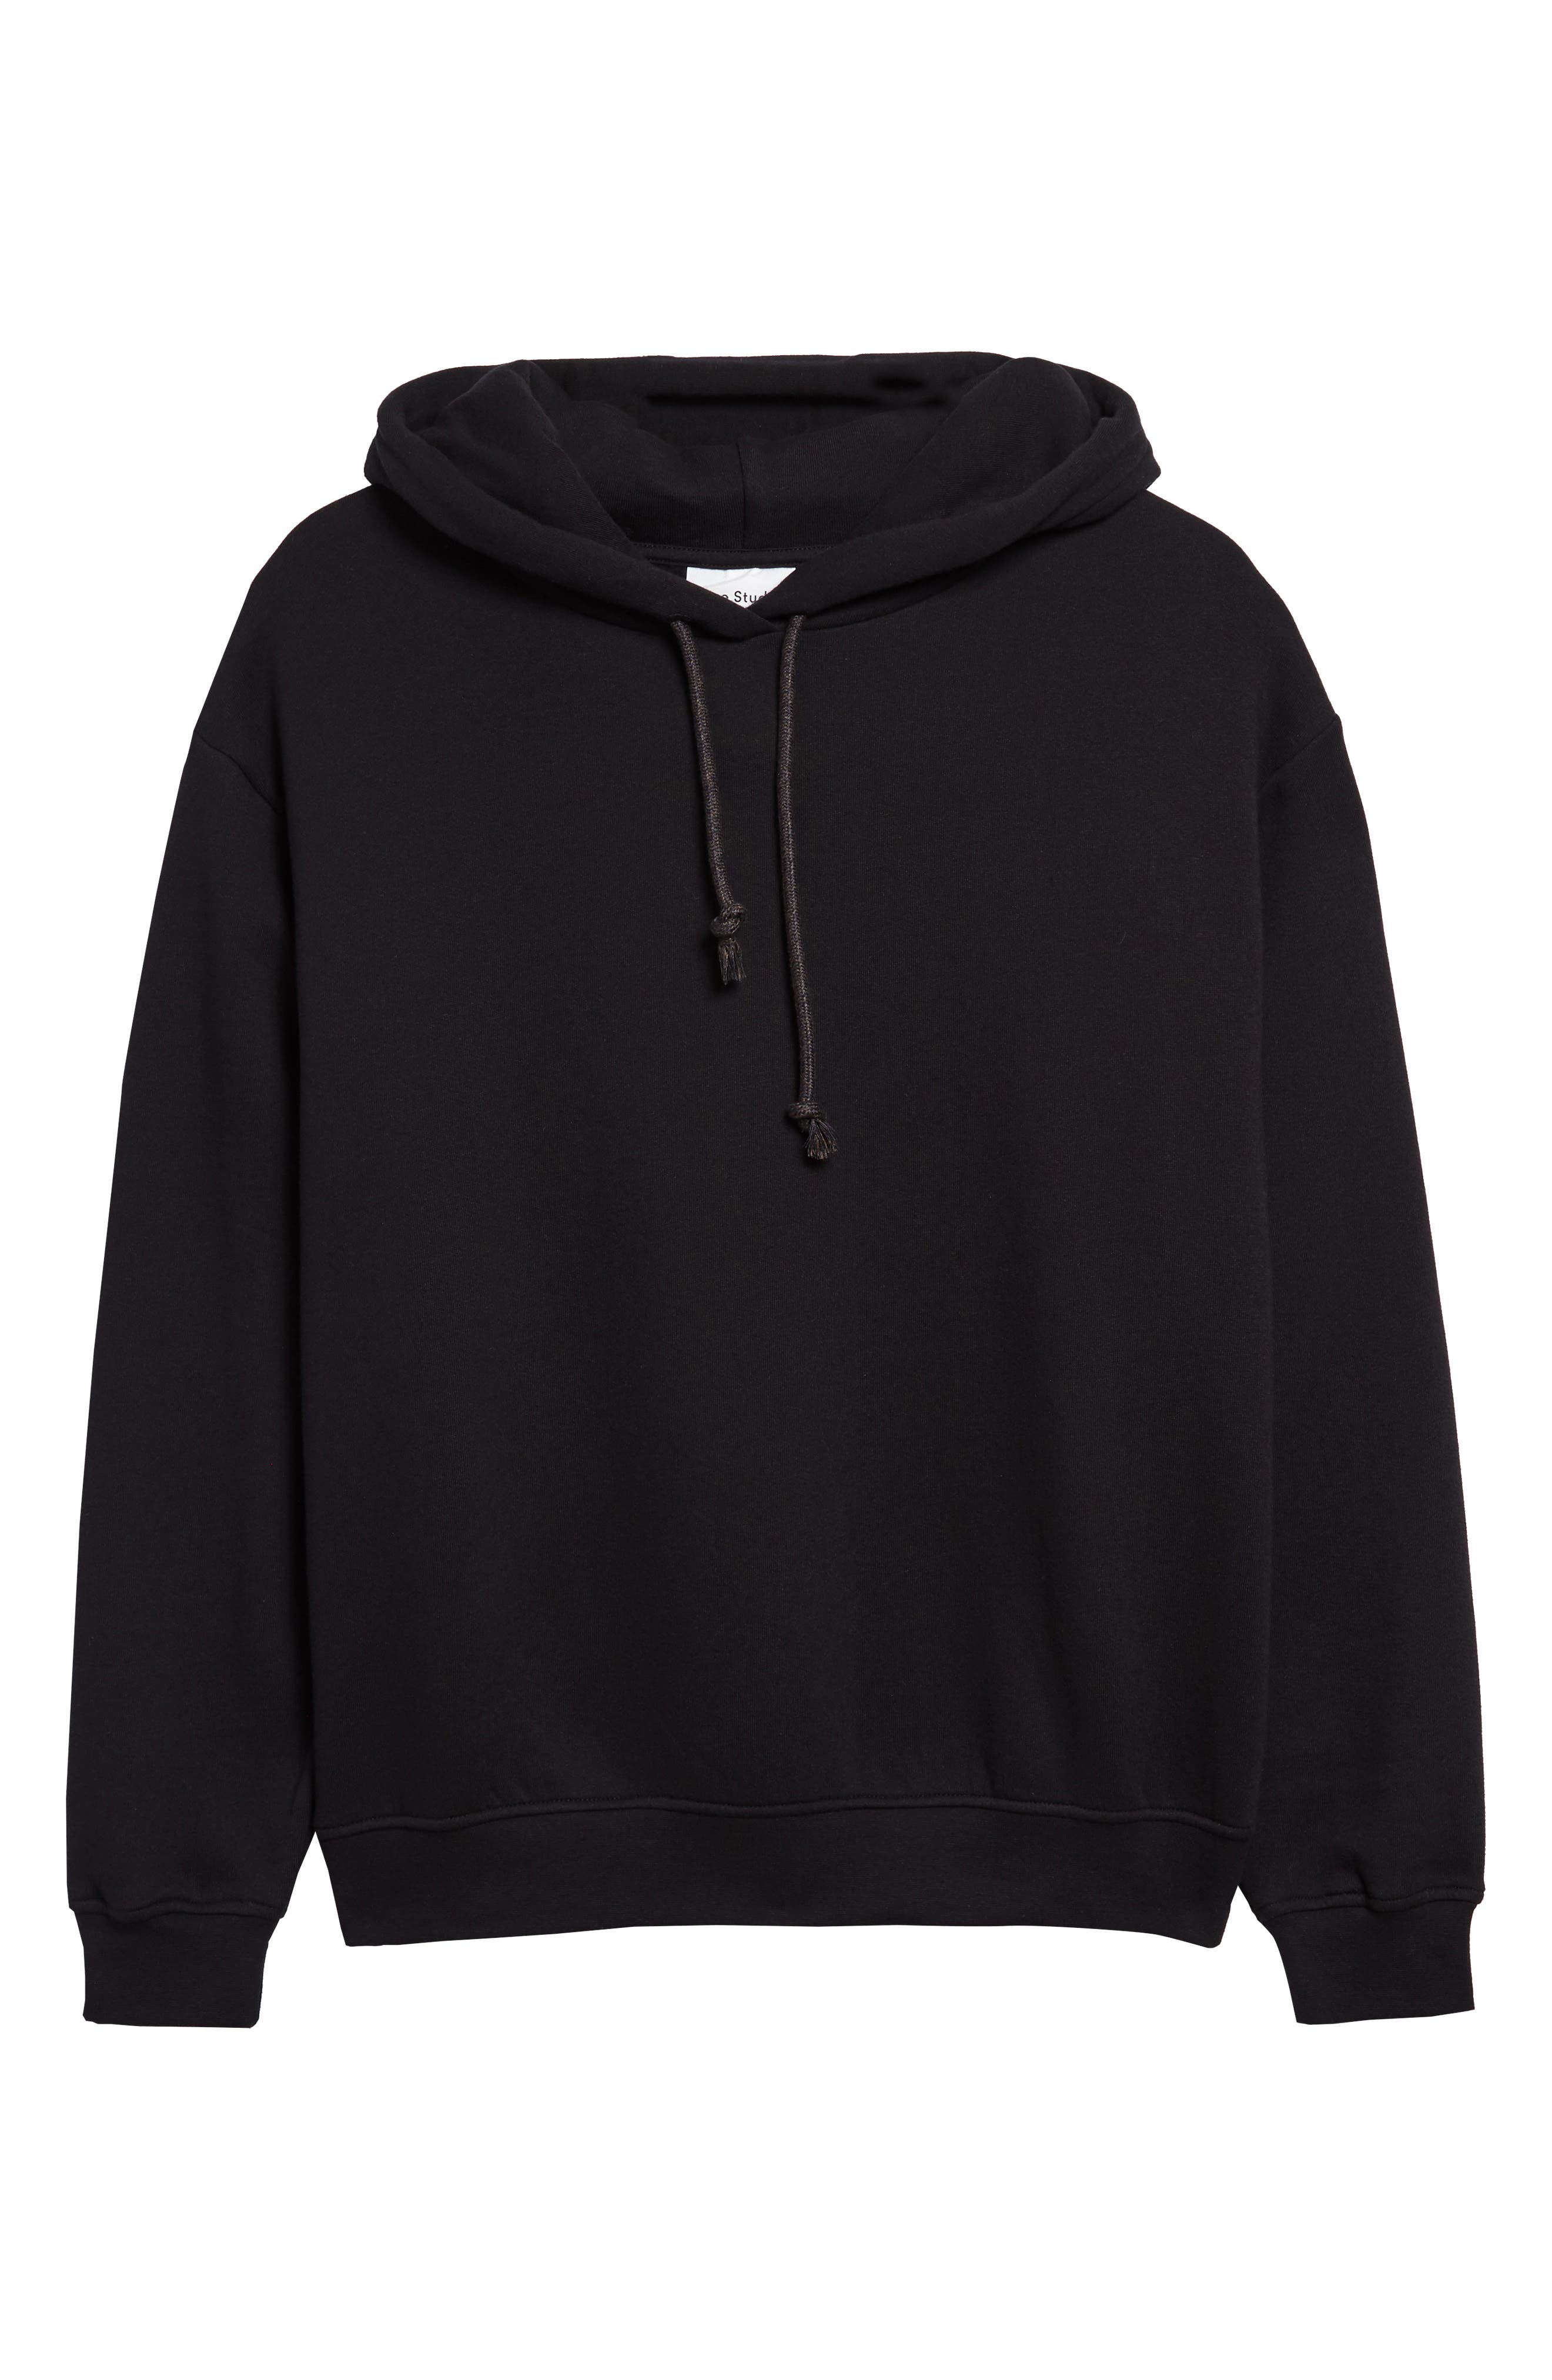 designer zip up hoodie womens